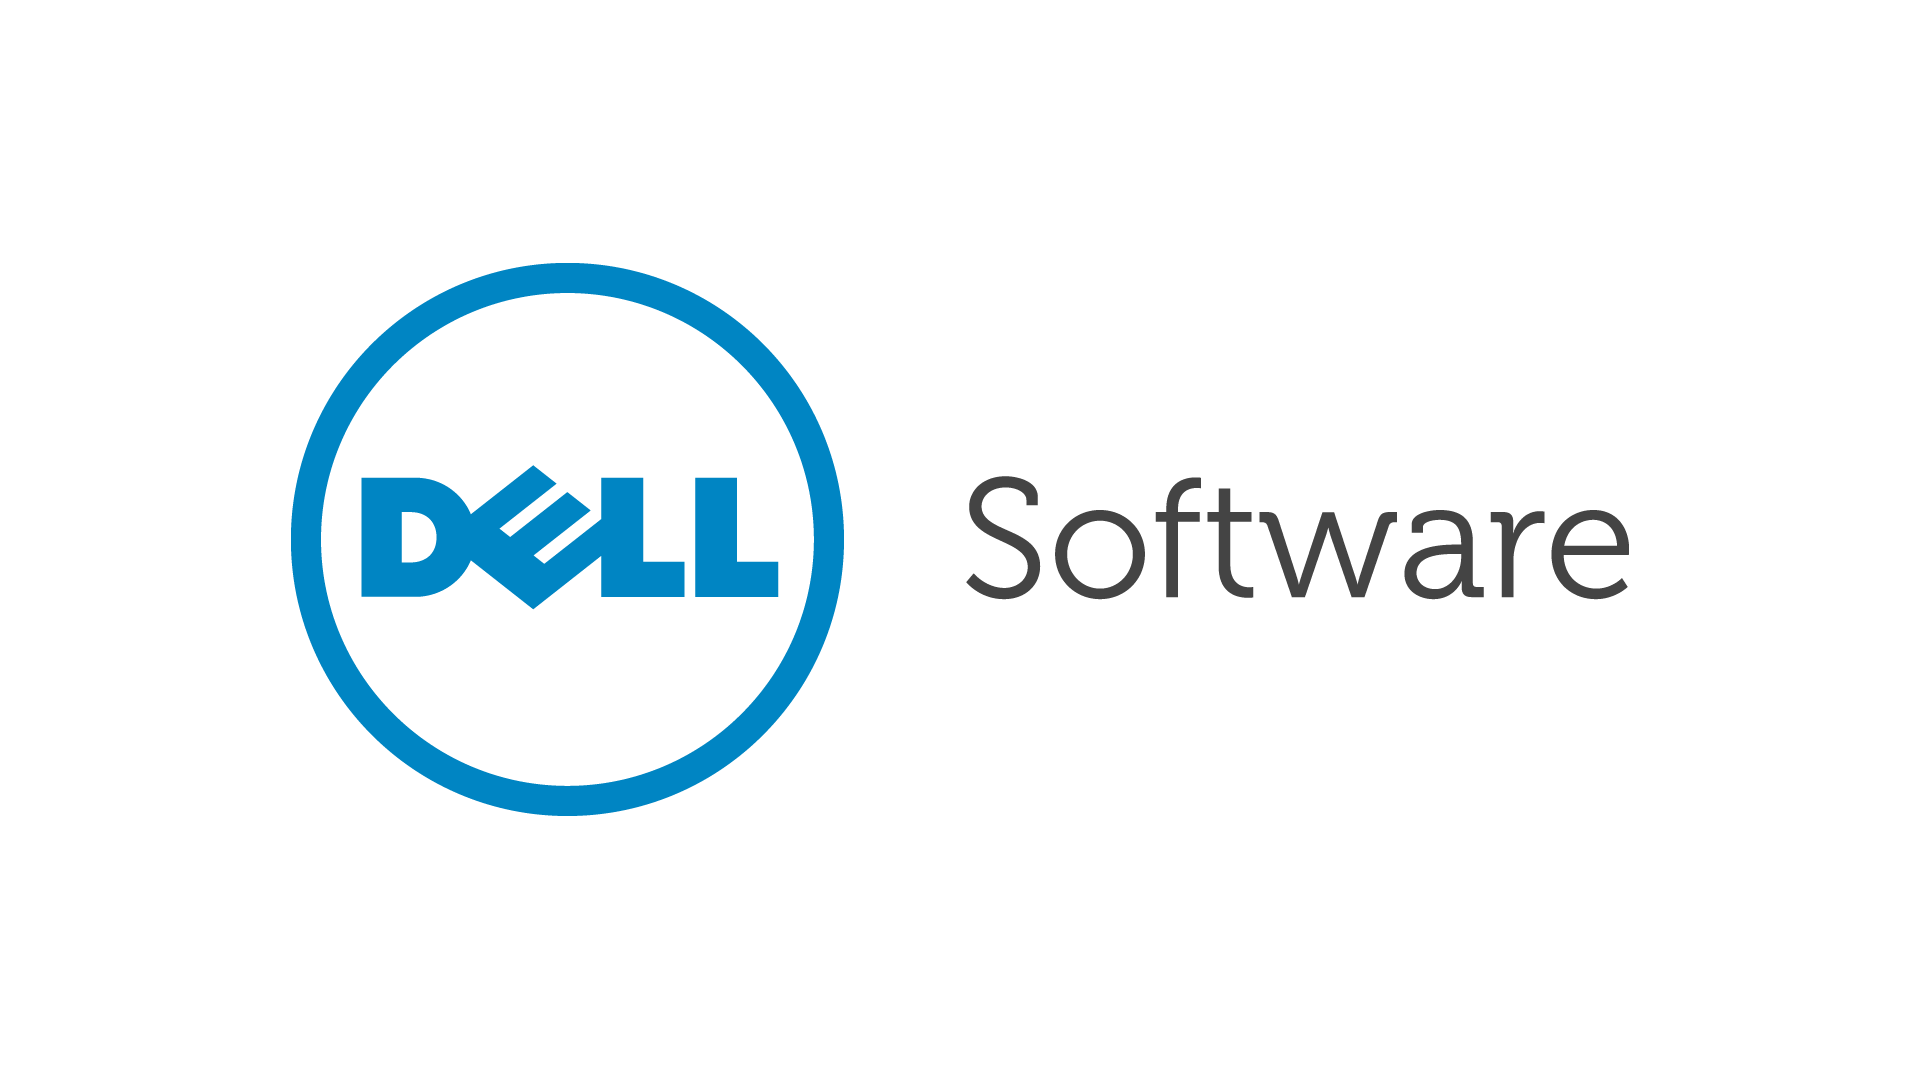 Dell Software_Blue